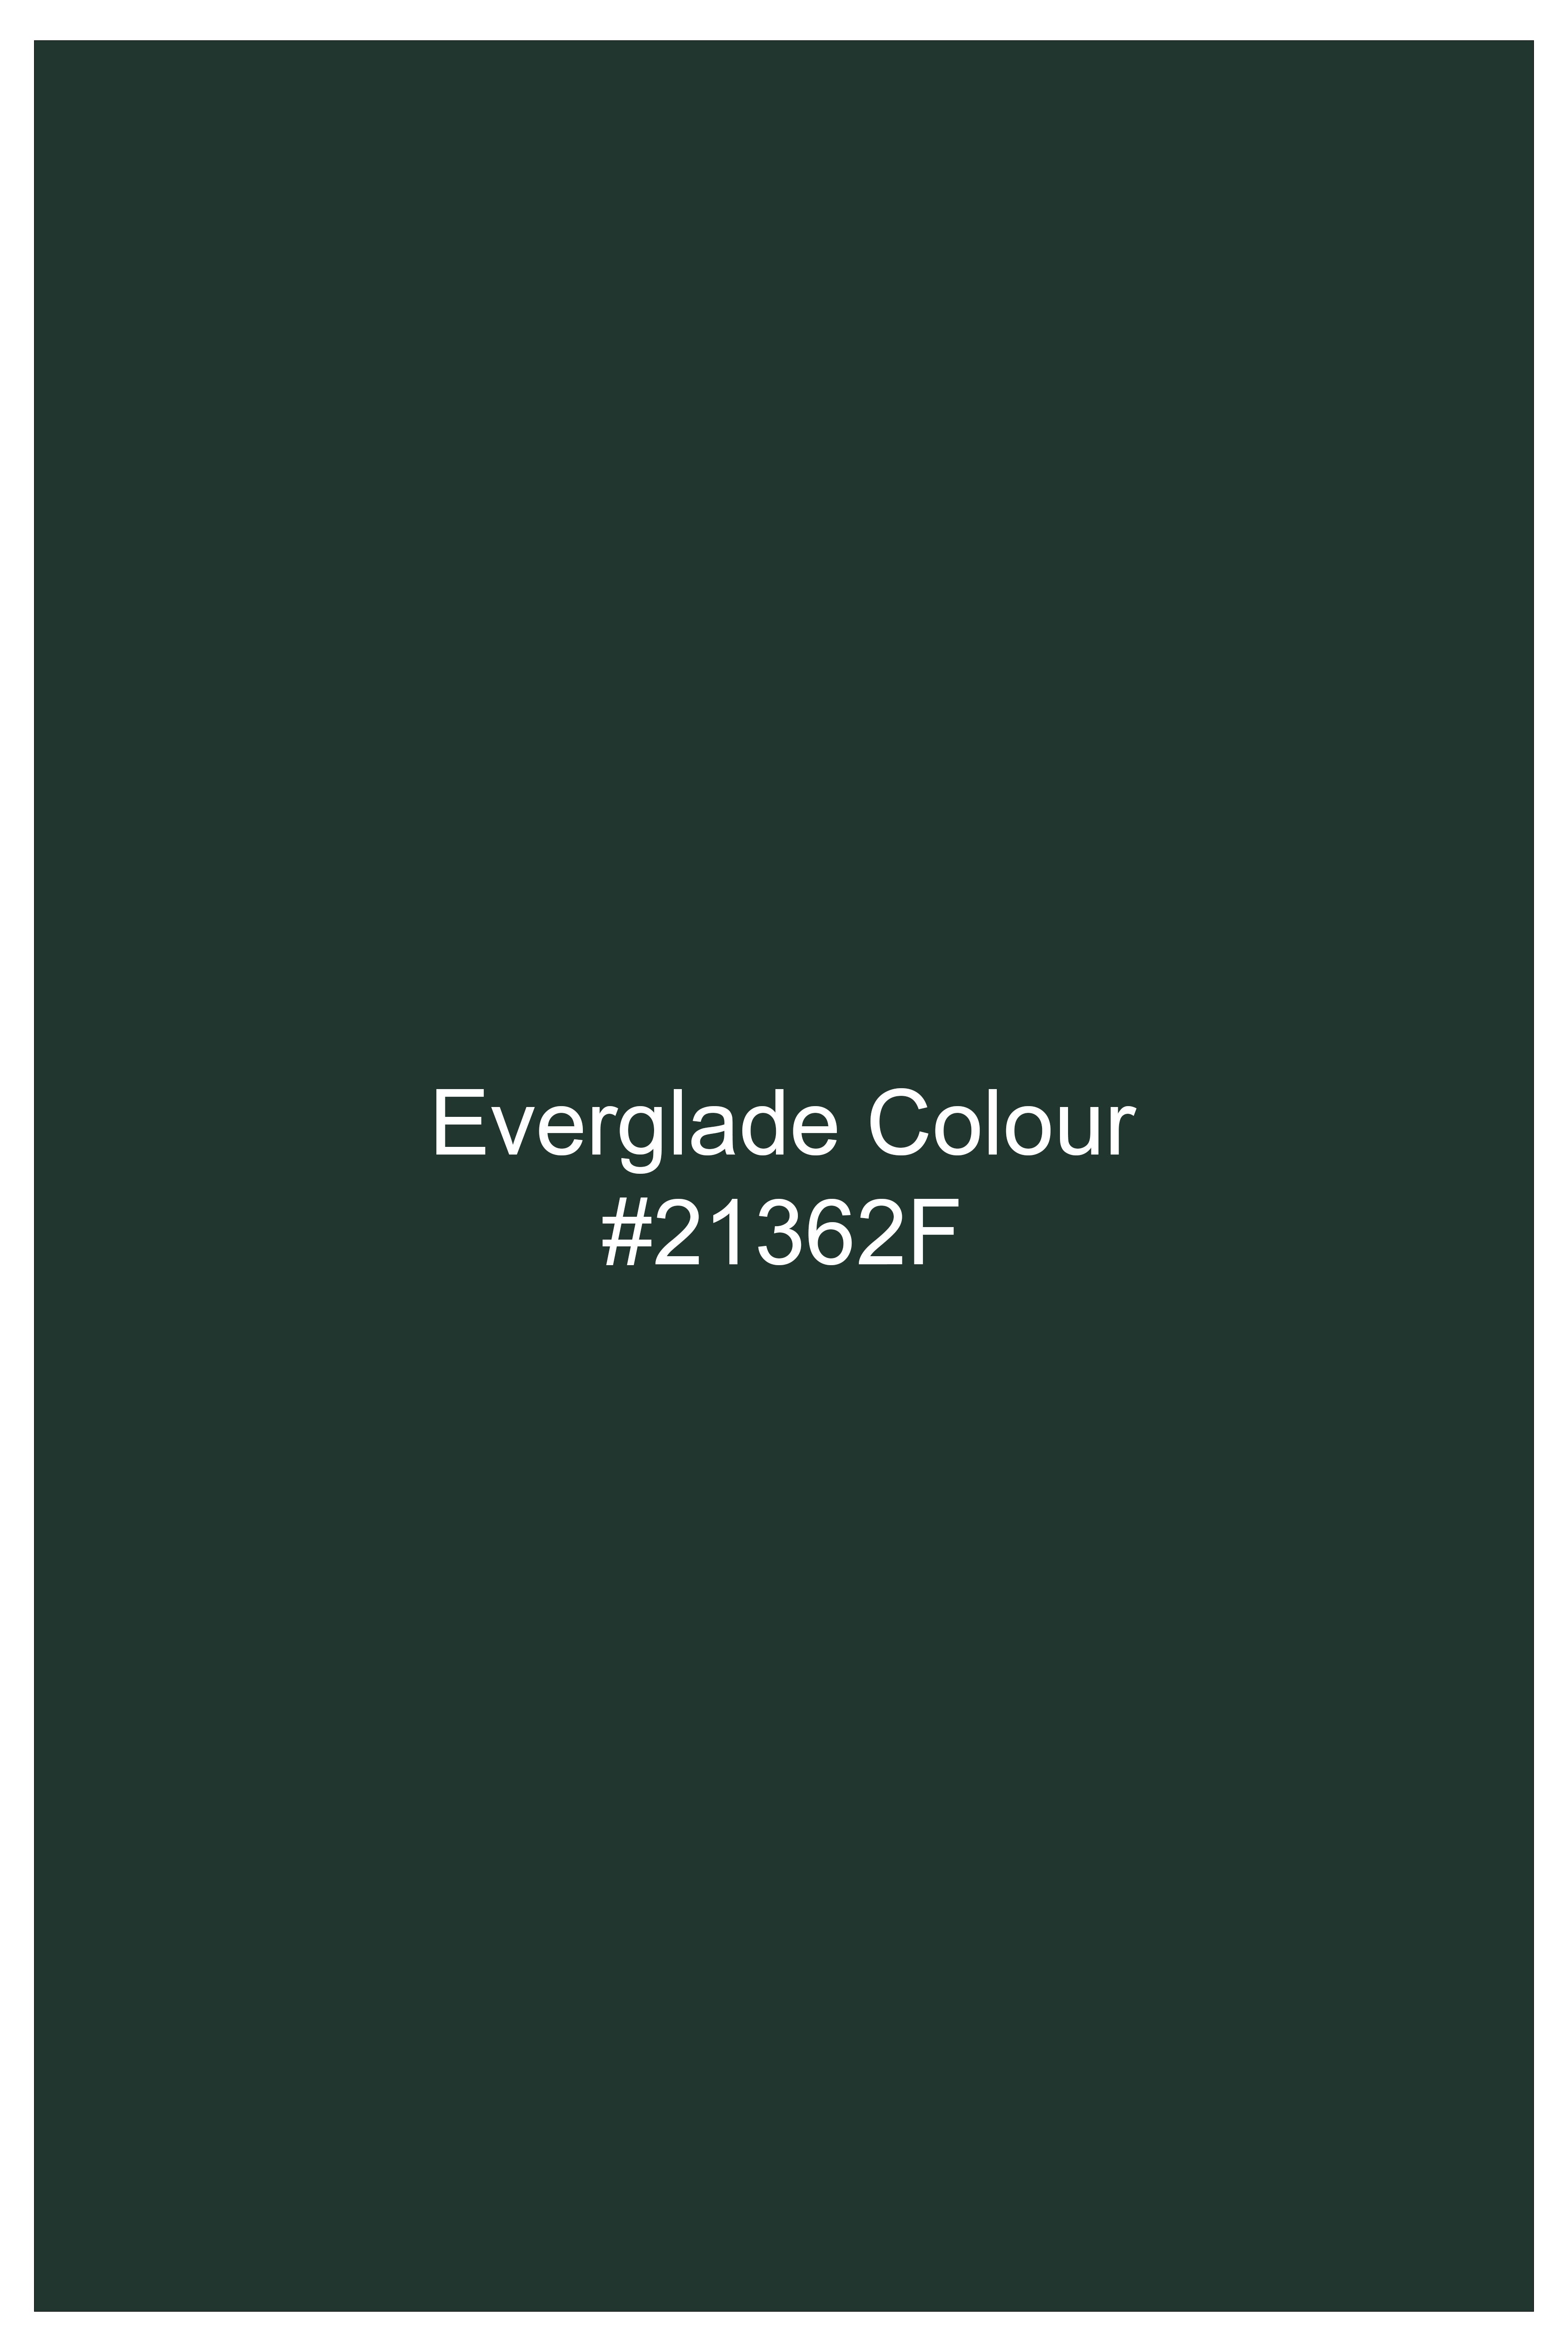 Everglade Green Plain Solid Wool Blend Pant